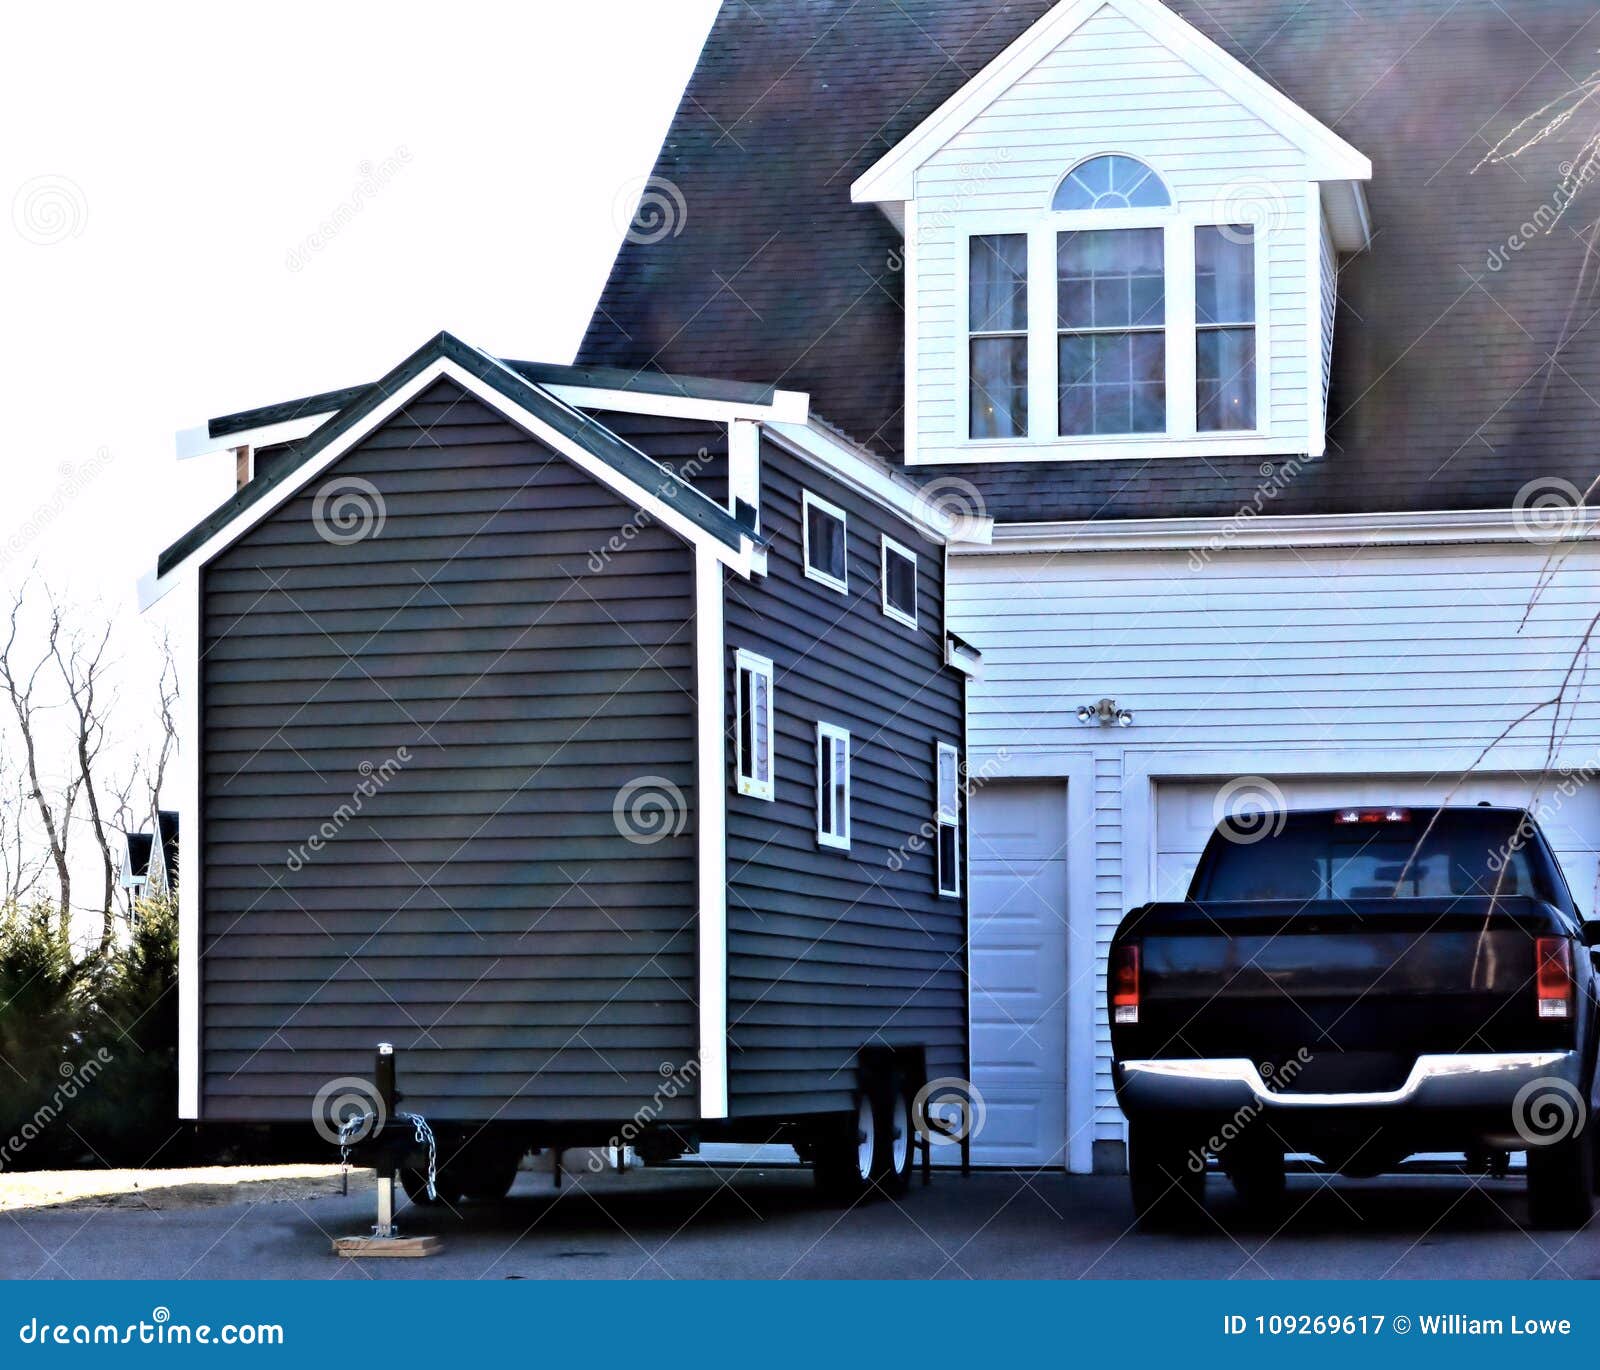 Tiny House Big Garage stock image. Image of small, friendly - 109269617